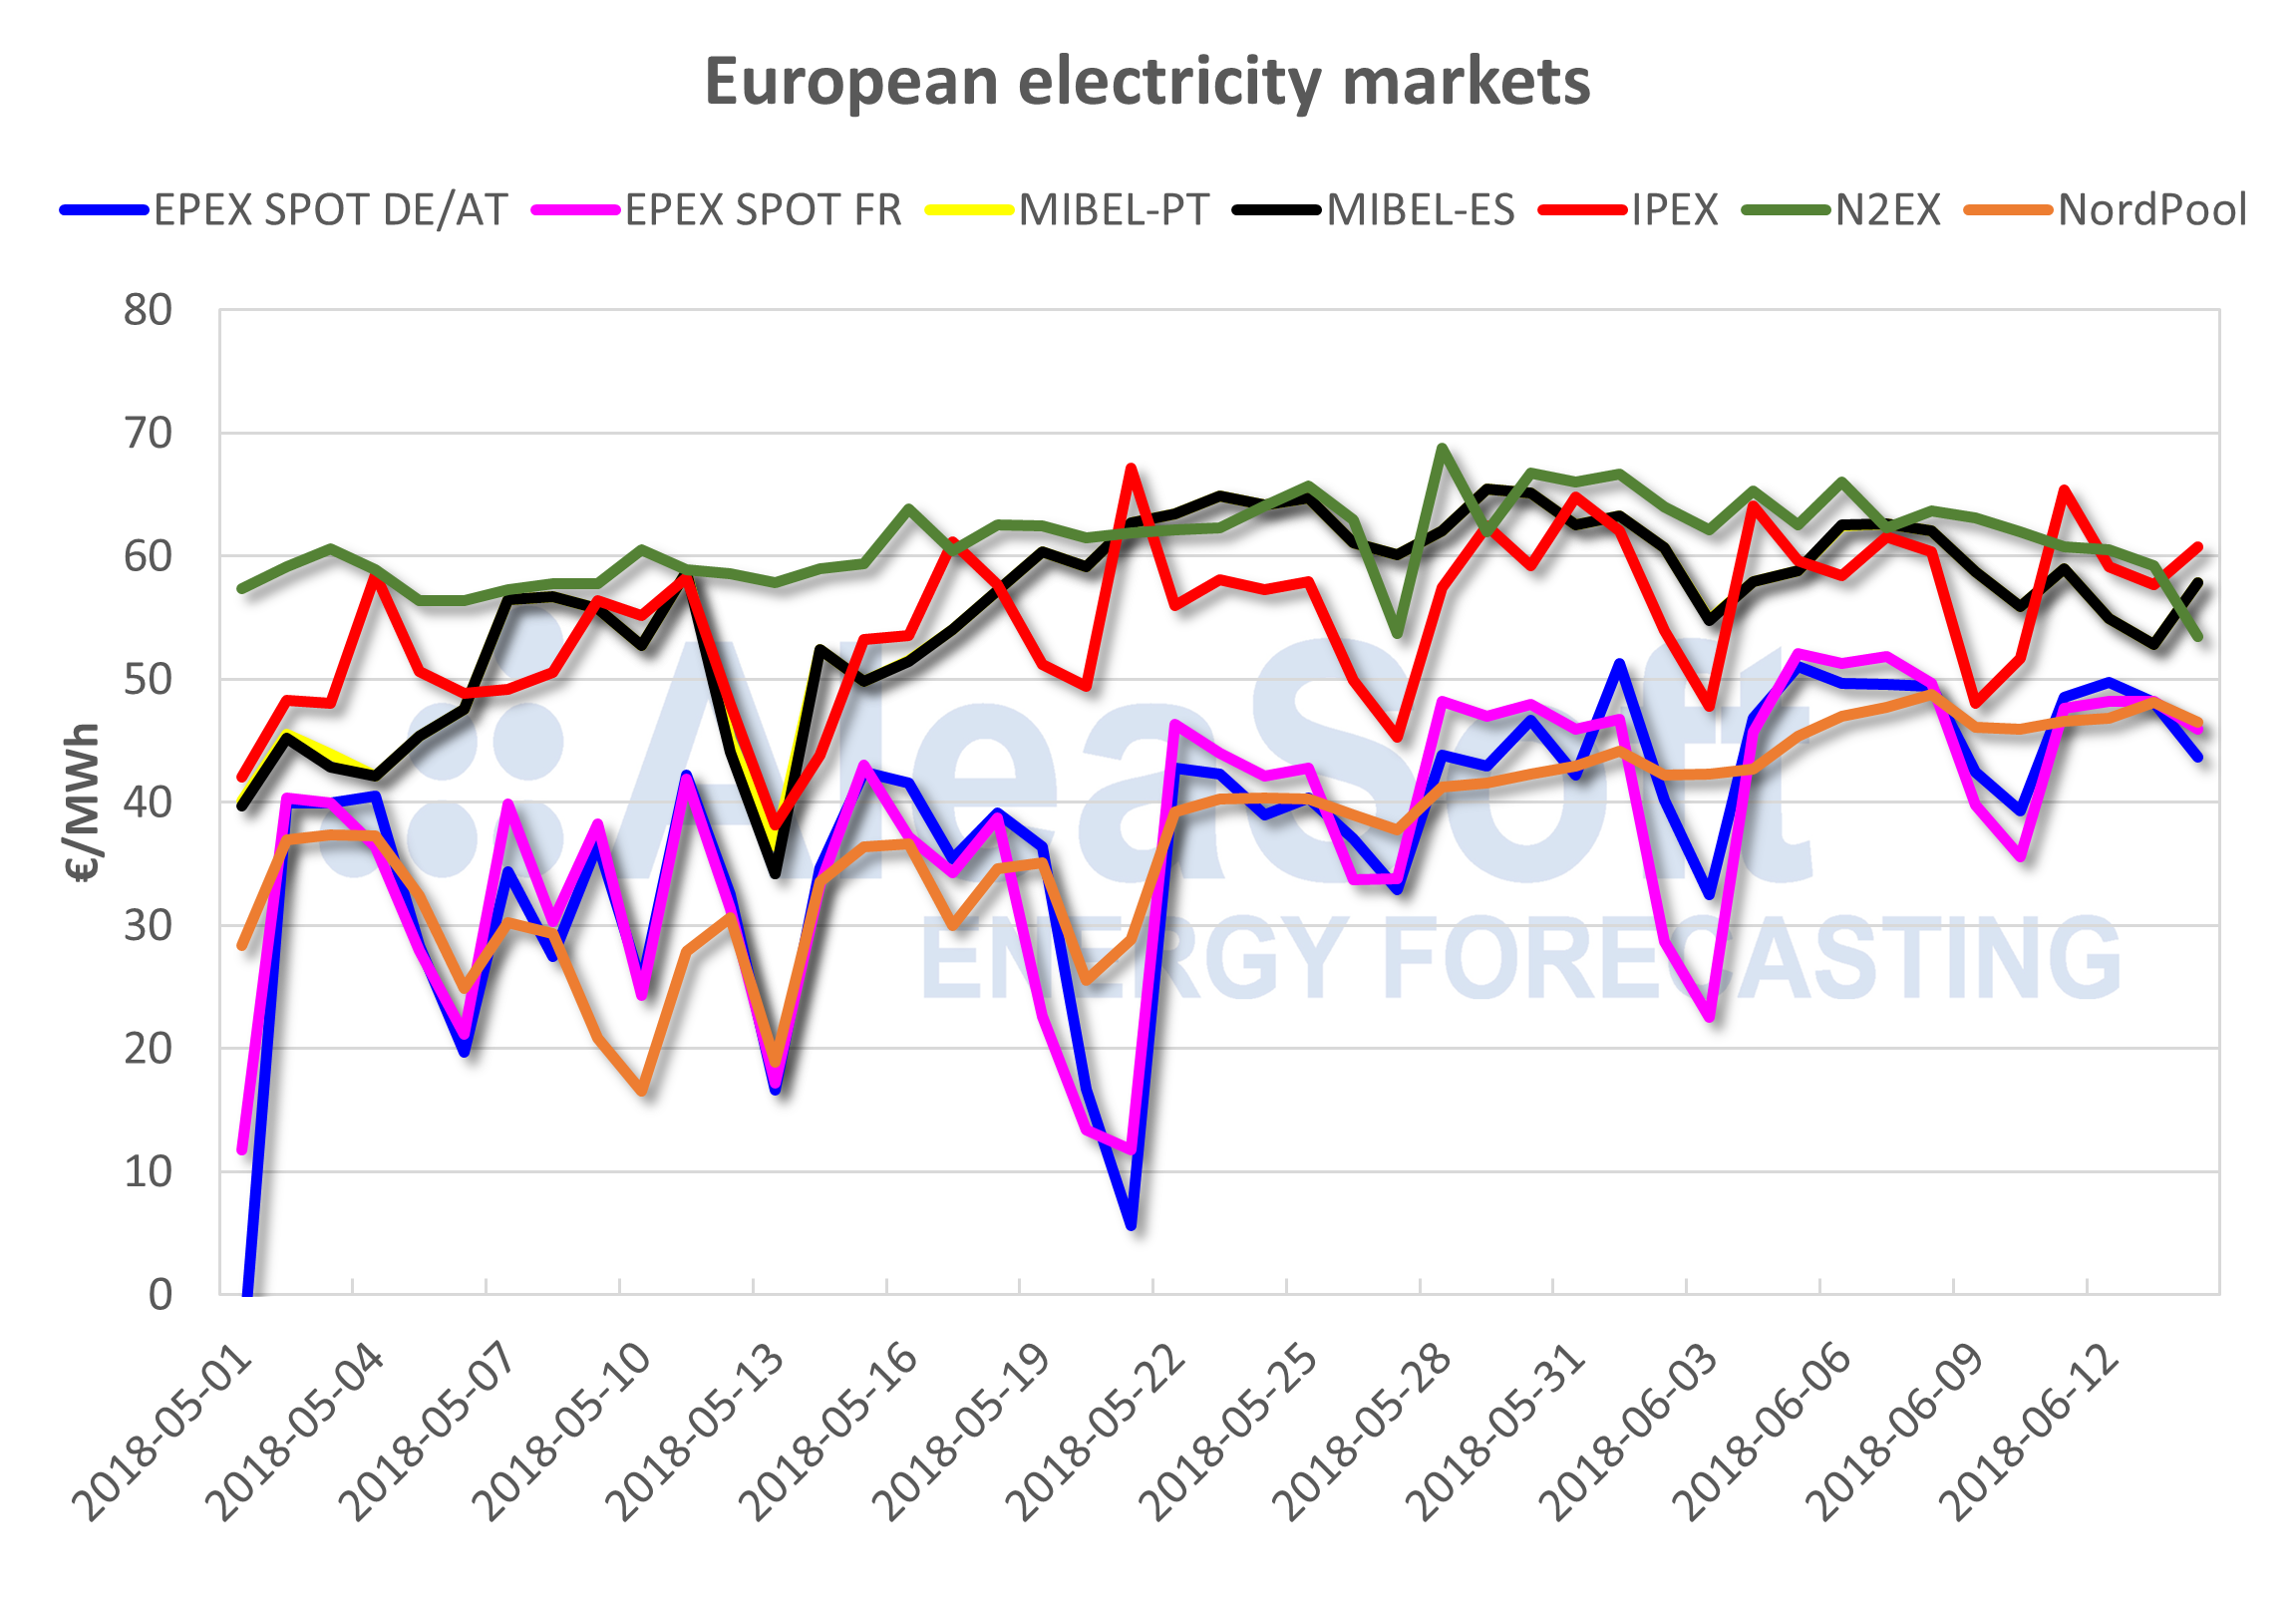 AleaSoft - European electricity markets price